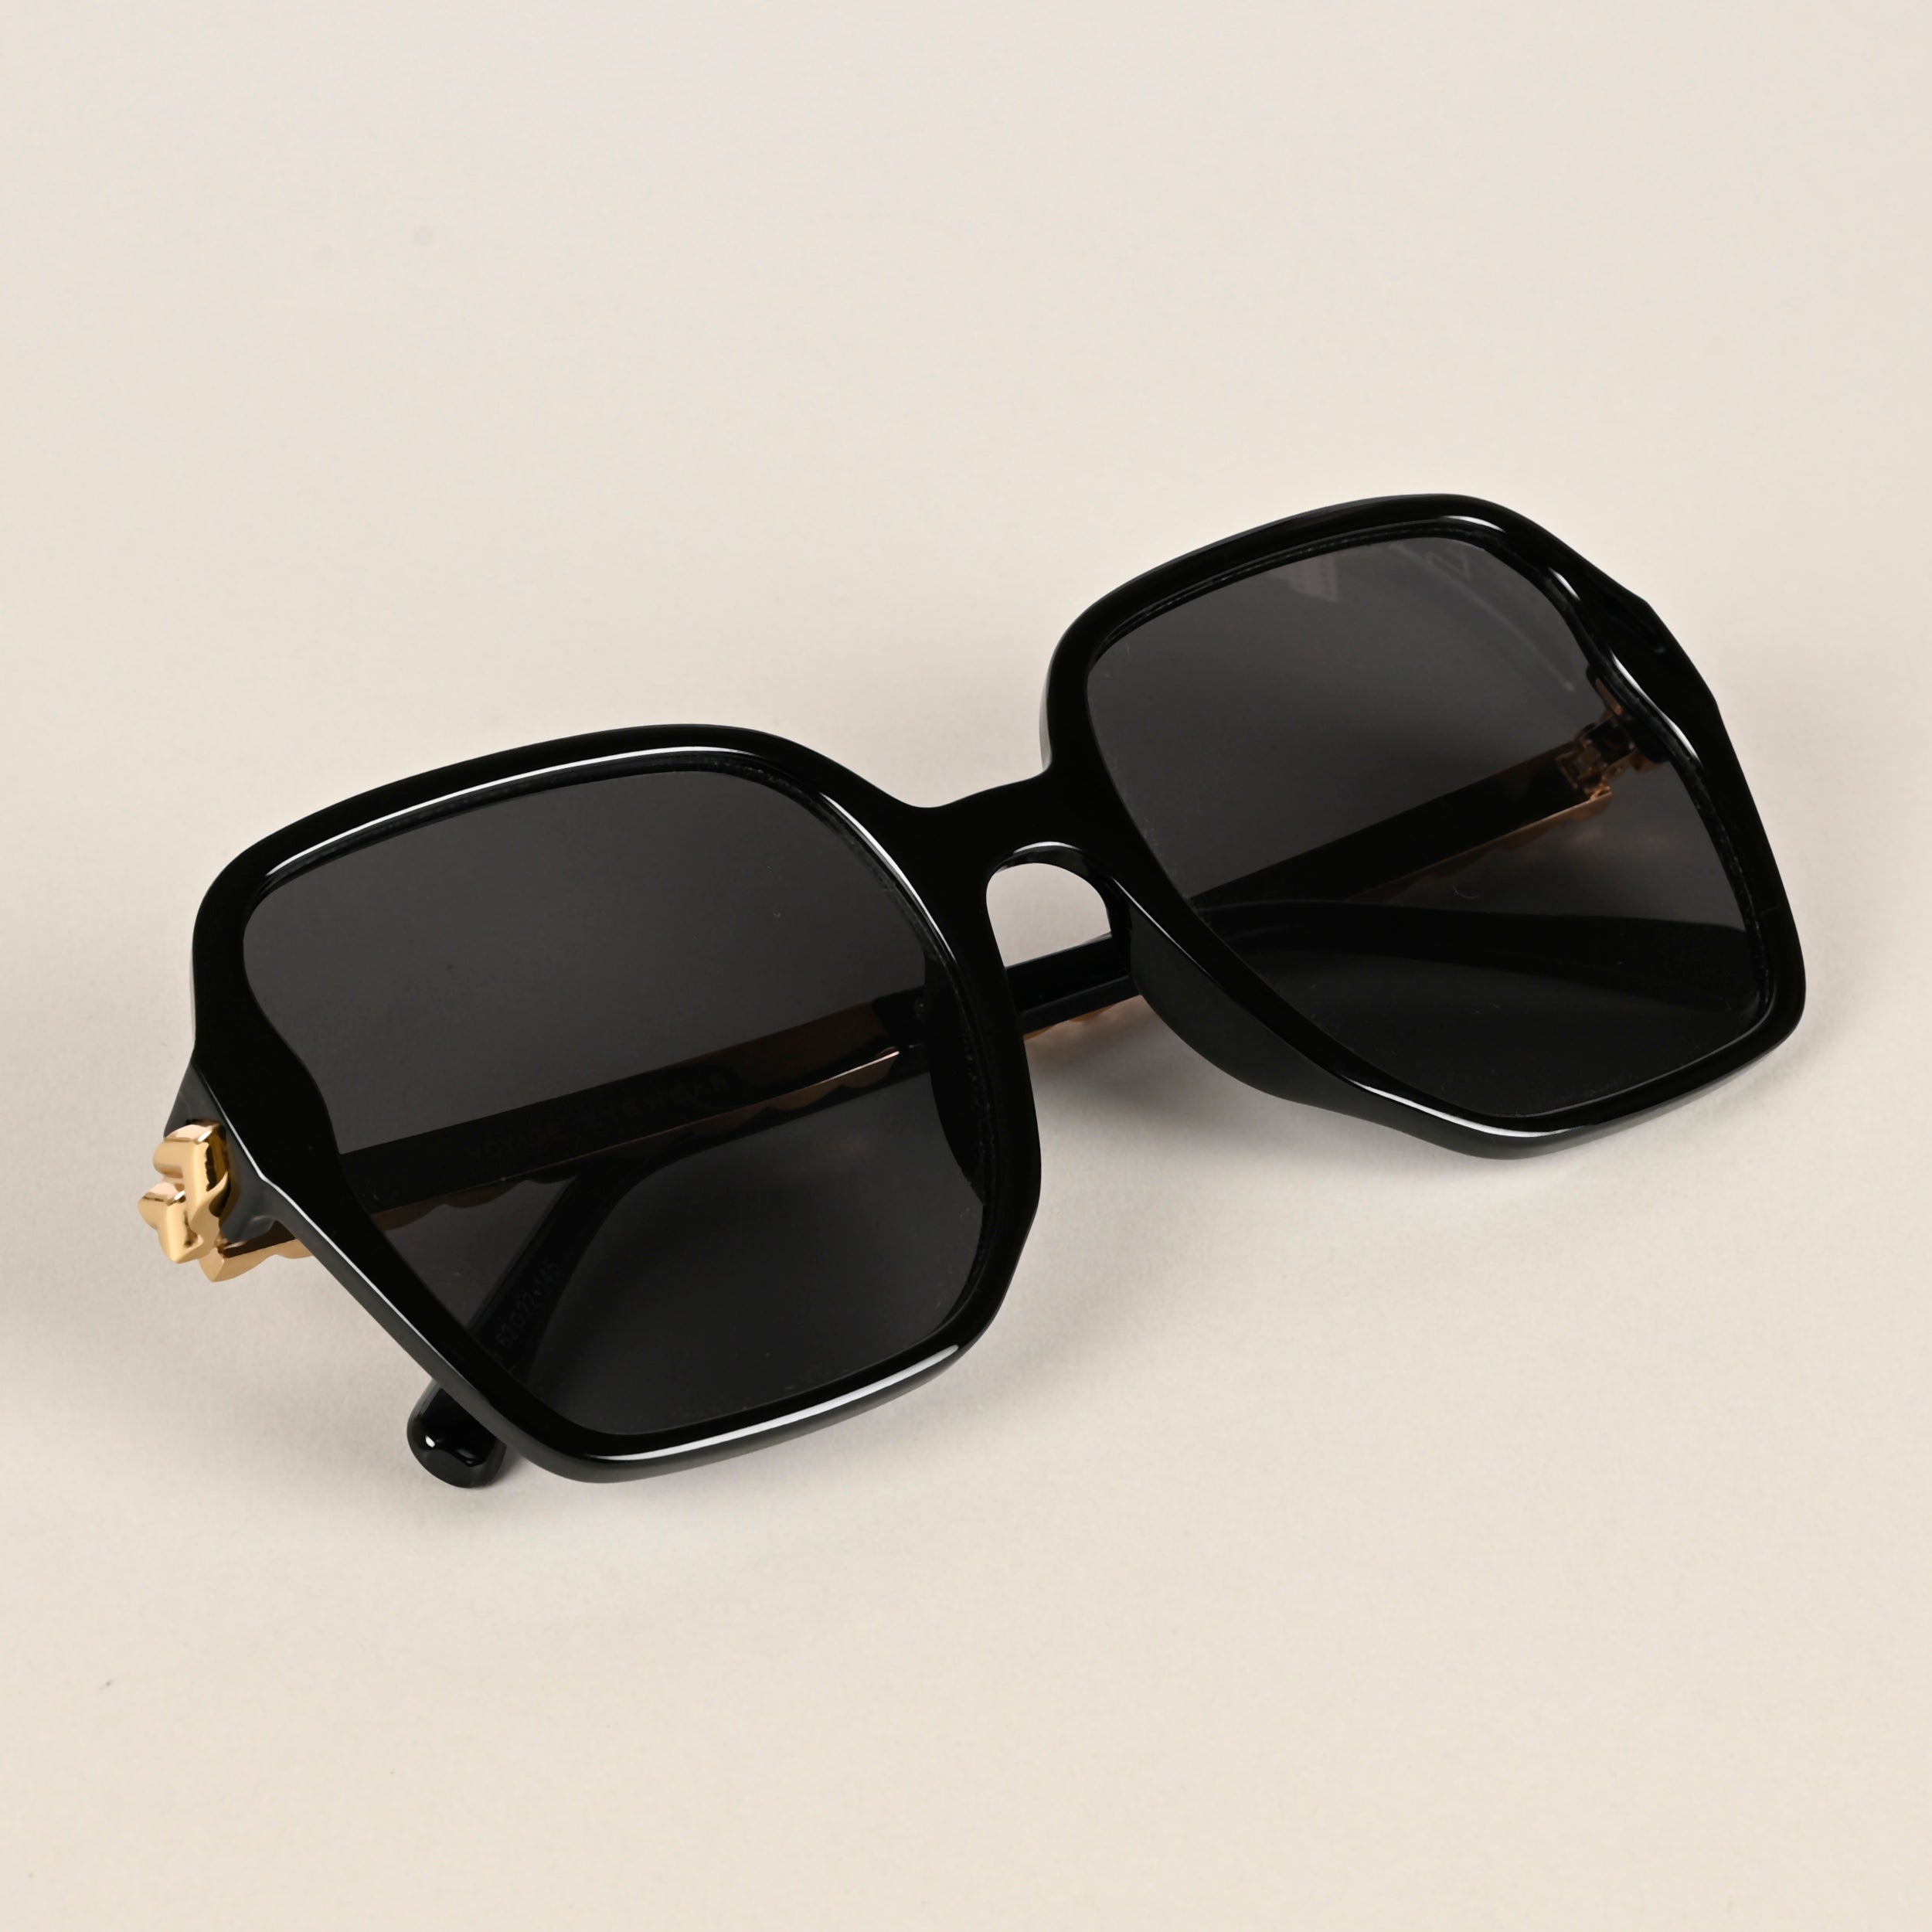 Voyage Black Square Sunglasses for Men & Women (485MG4194)